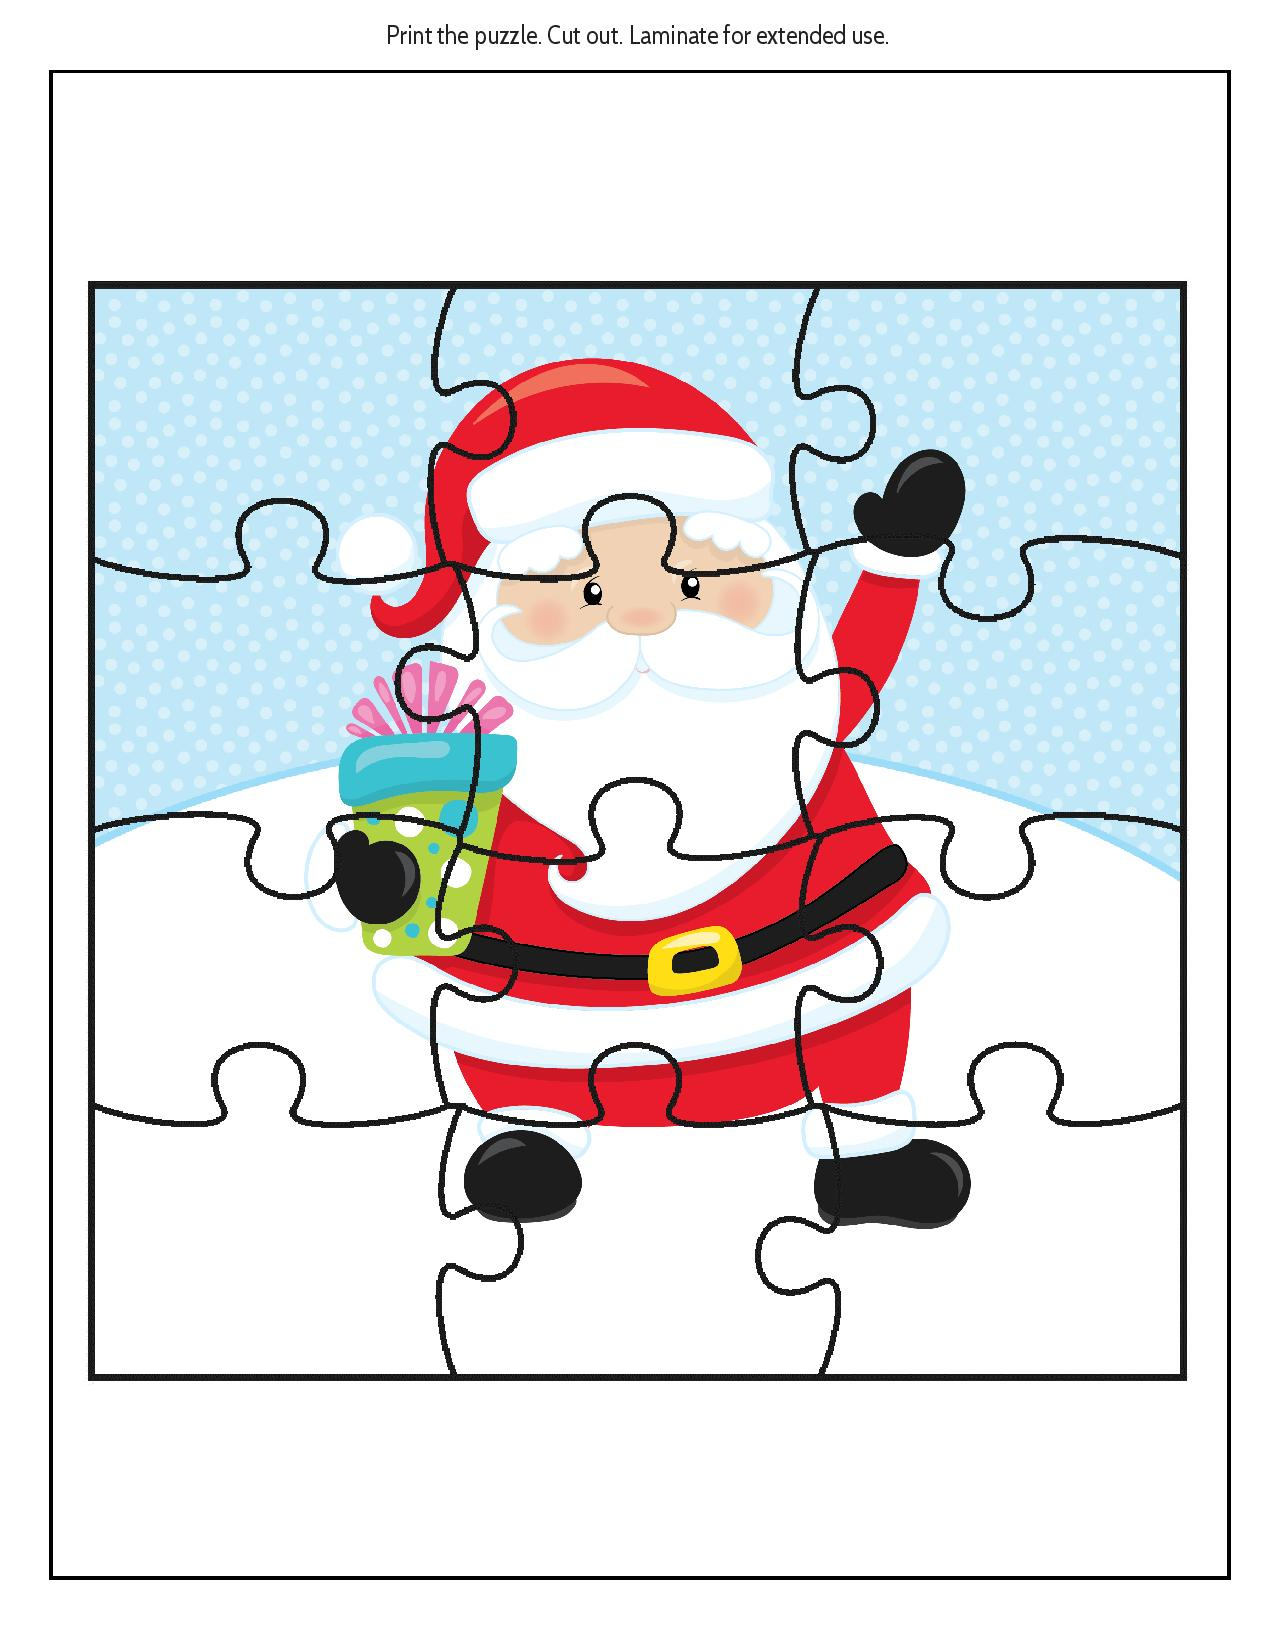 Free Educational Printable Christmas Puzzle Pack - Real And Quirky - Free Printable Christmas Puzzles